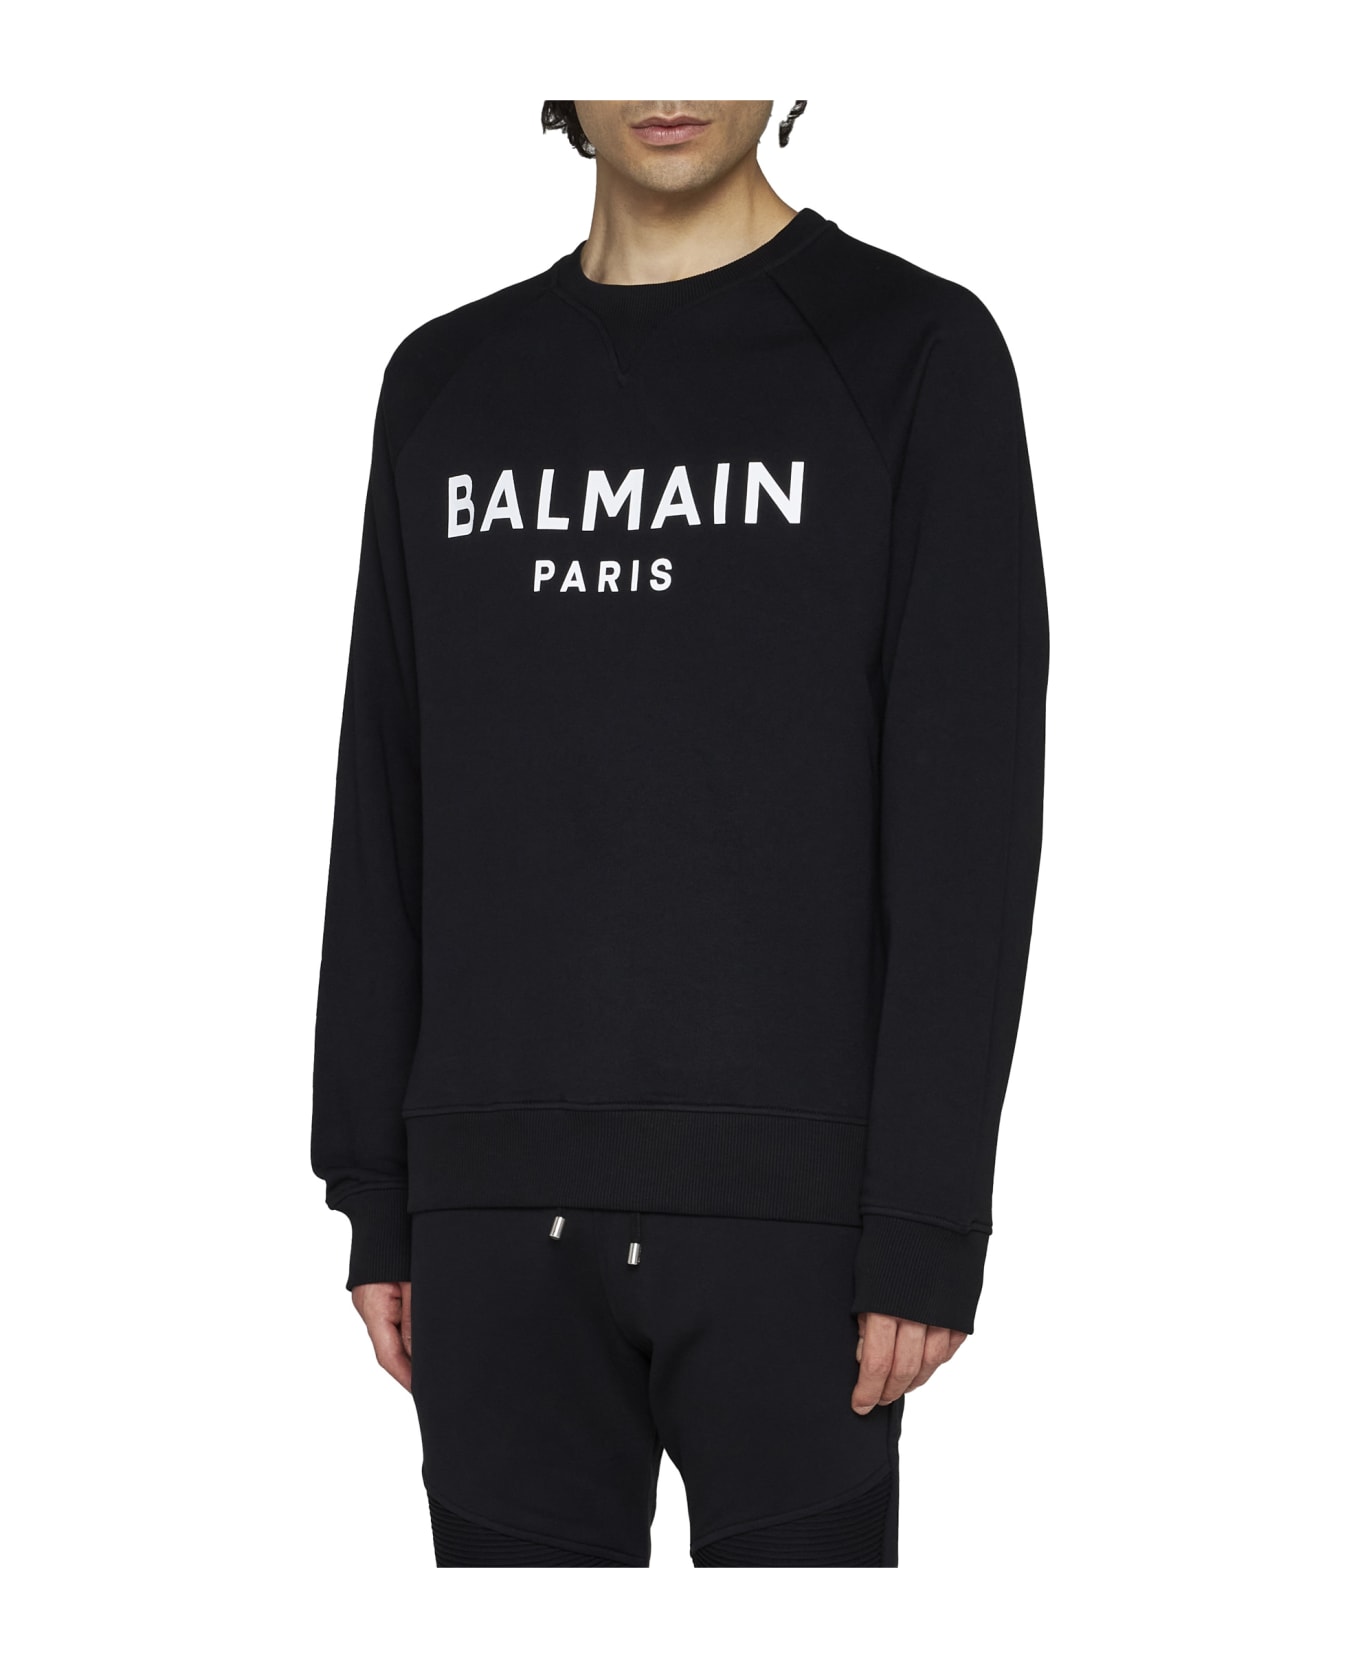 Balmain Logo Print Sweatshirt - Black